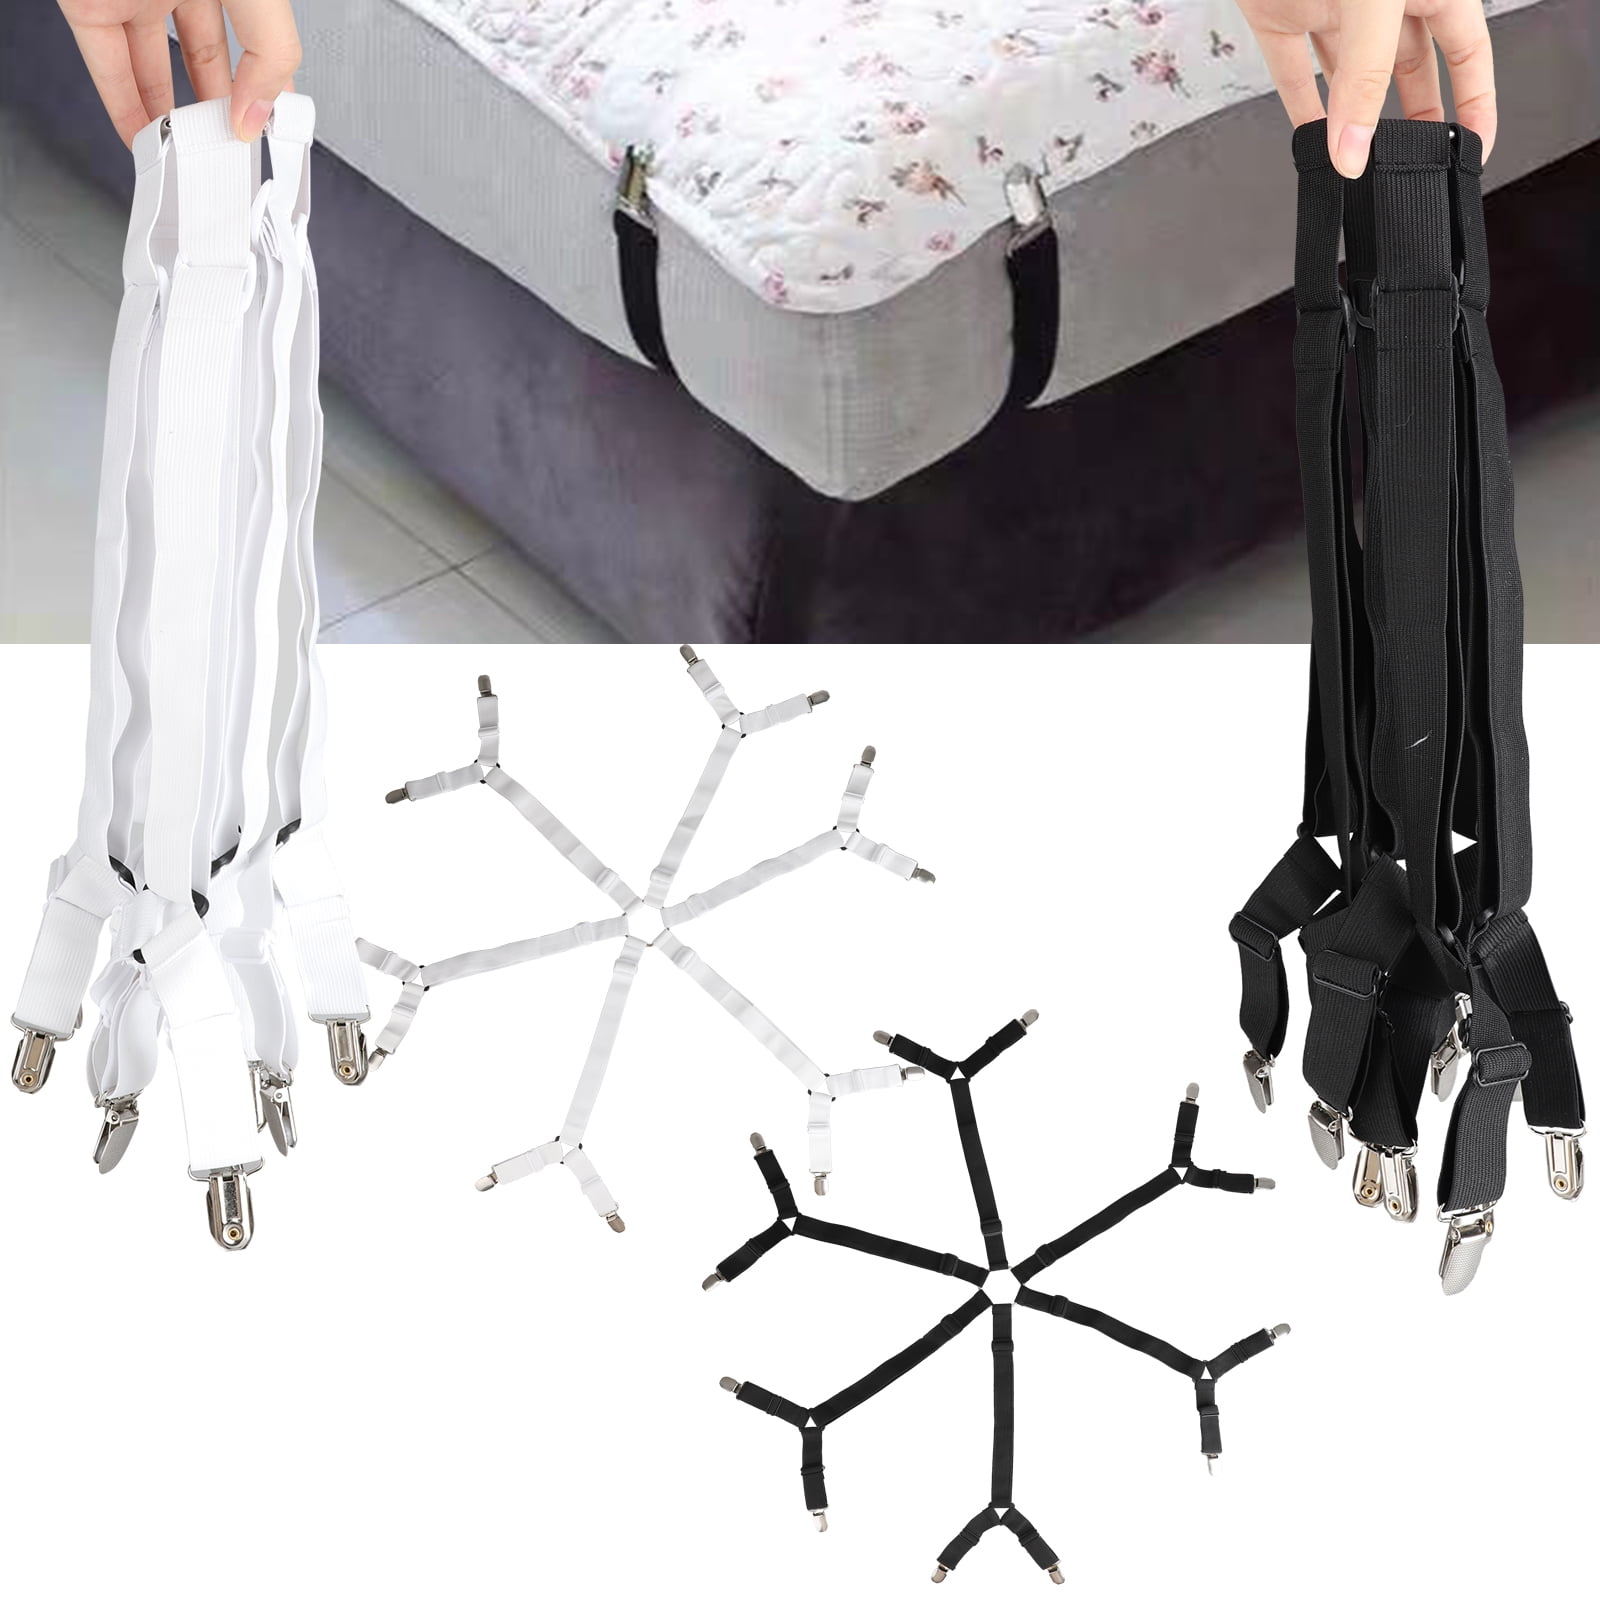 Adjustable Crisscross Bed Fitted Sheet Straps Clips Suspenders Gripper Fastener 